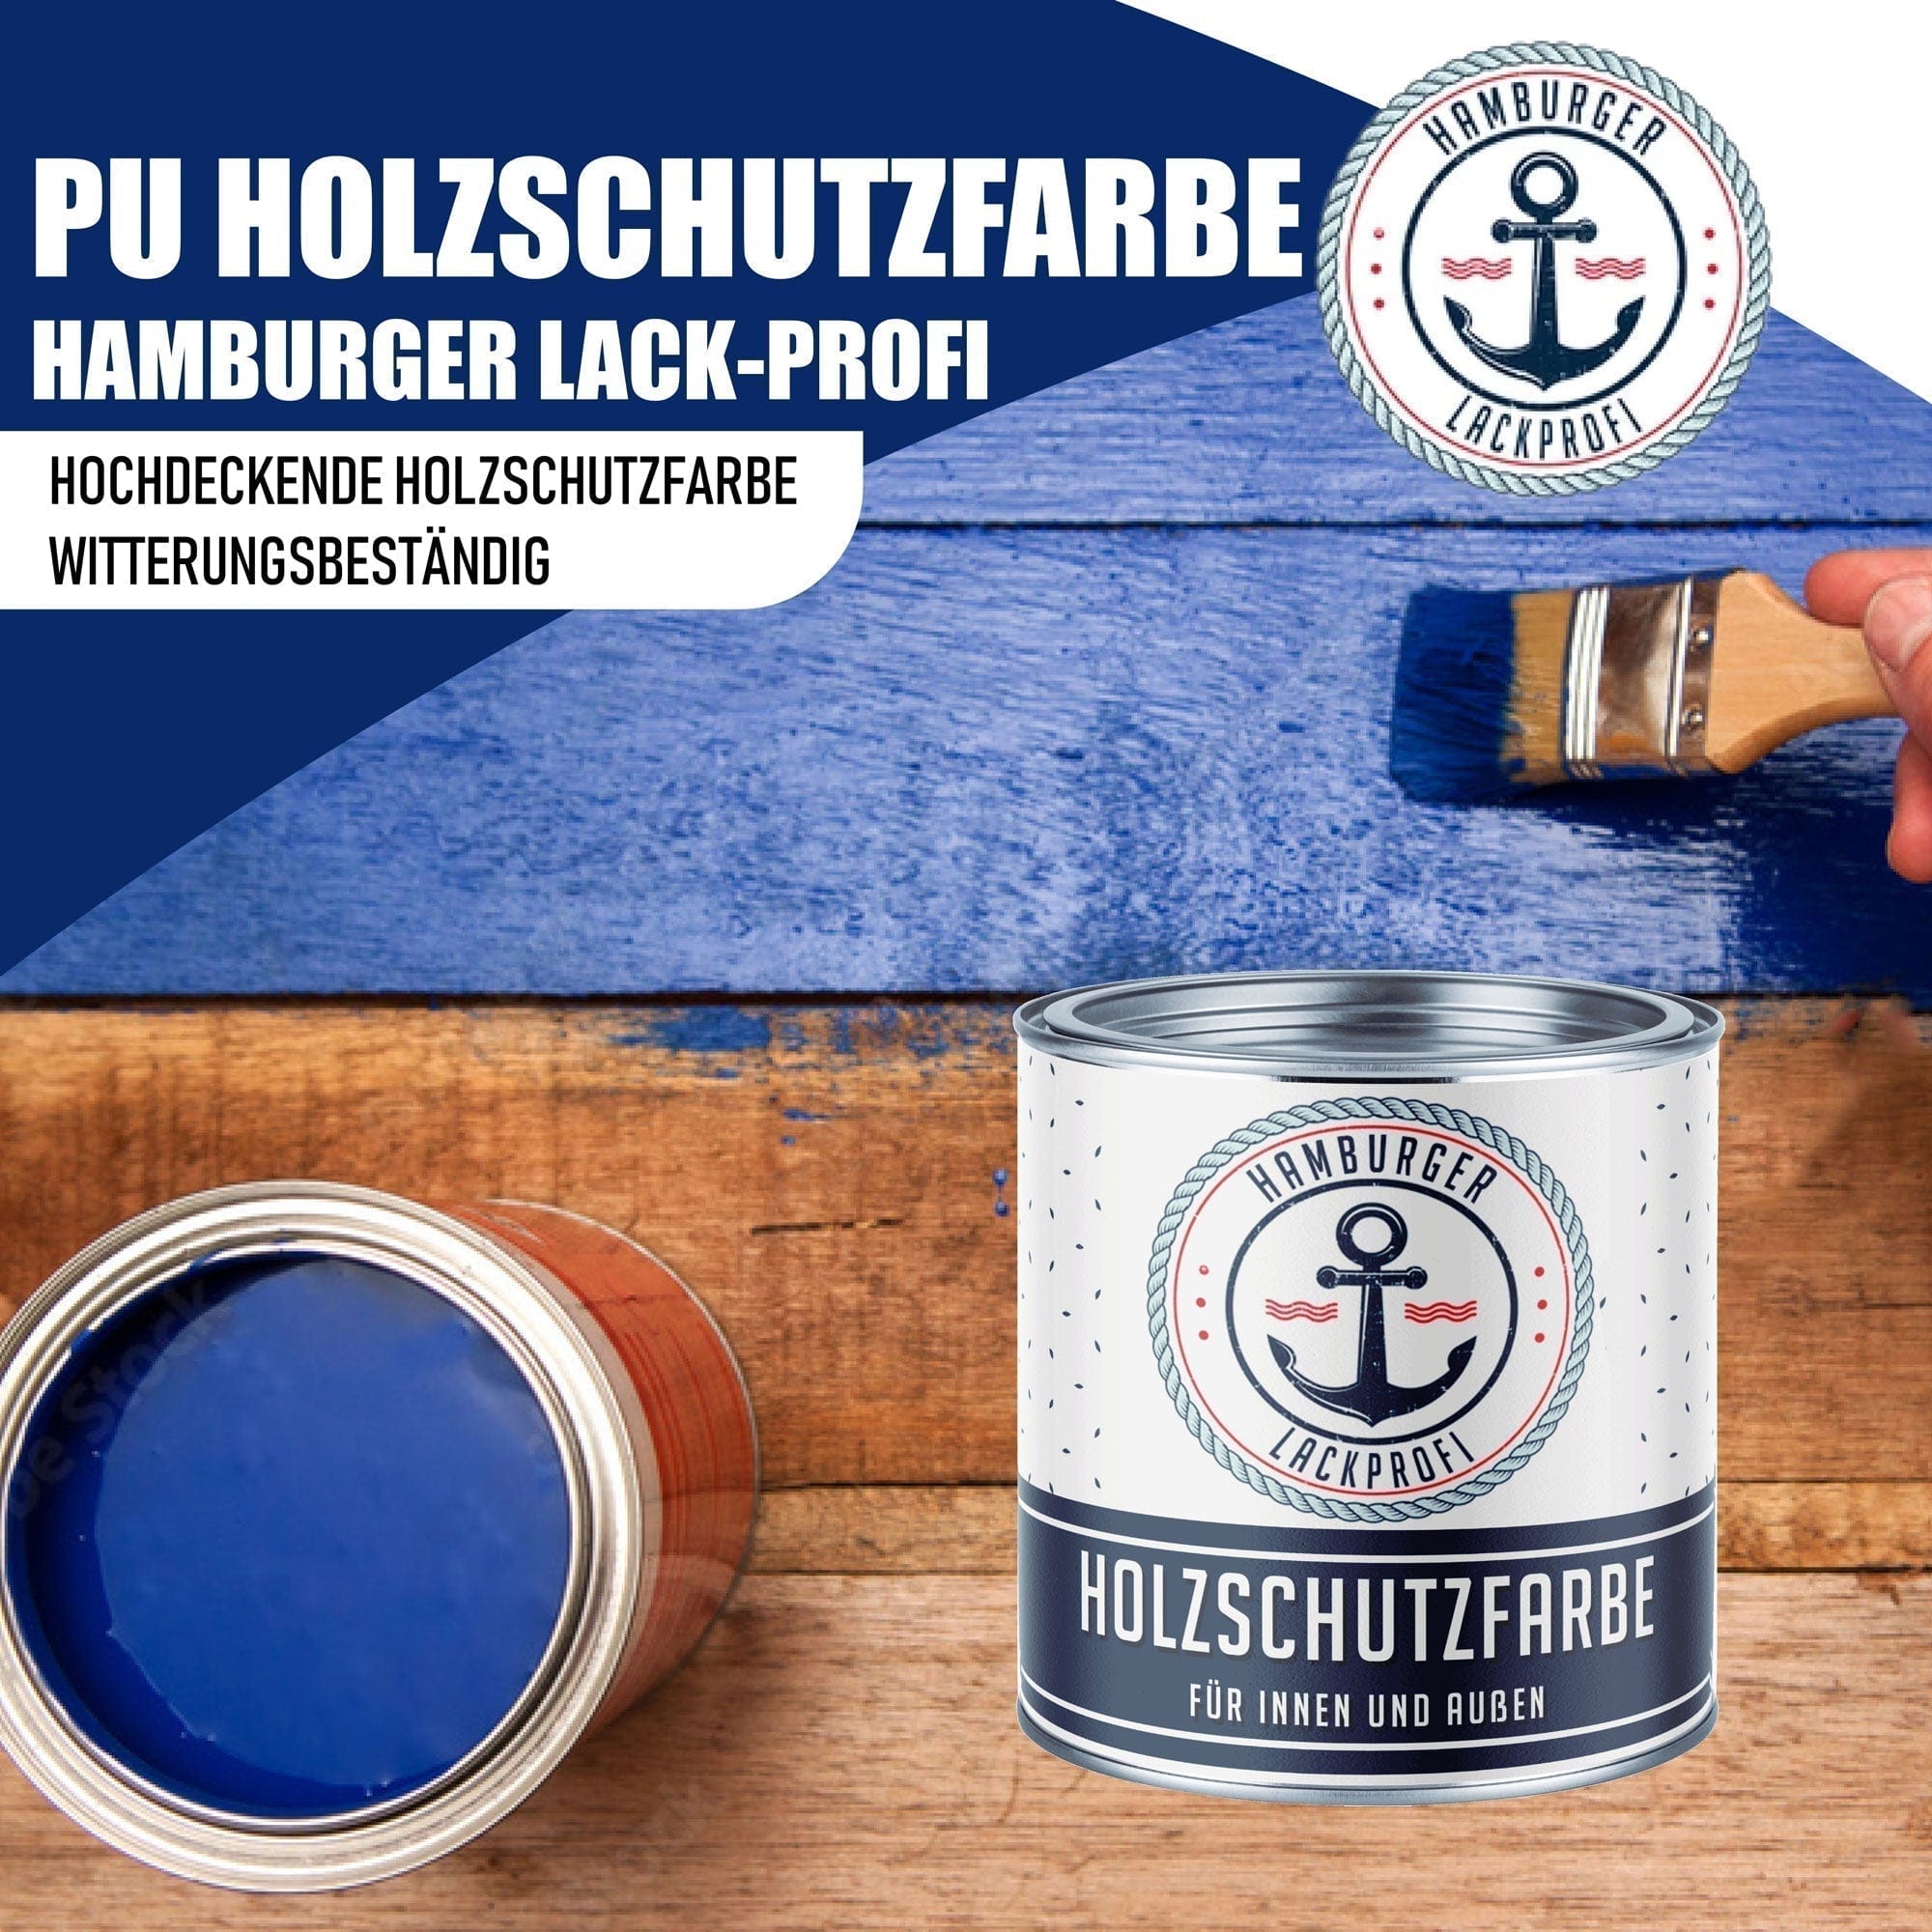 Hamburger Lack-Profi Lacke & Beschichtungen PU Holzschutzfarbe RAL 9002 Grauweiß - Wetterschutzfarbe